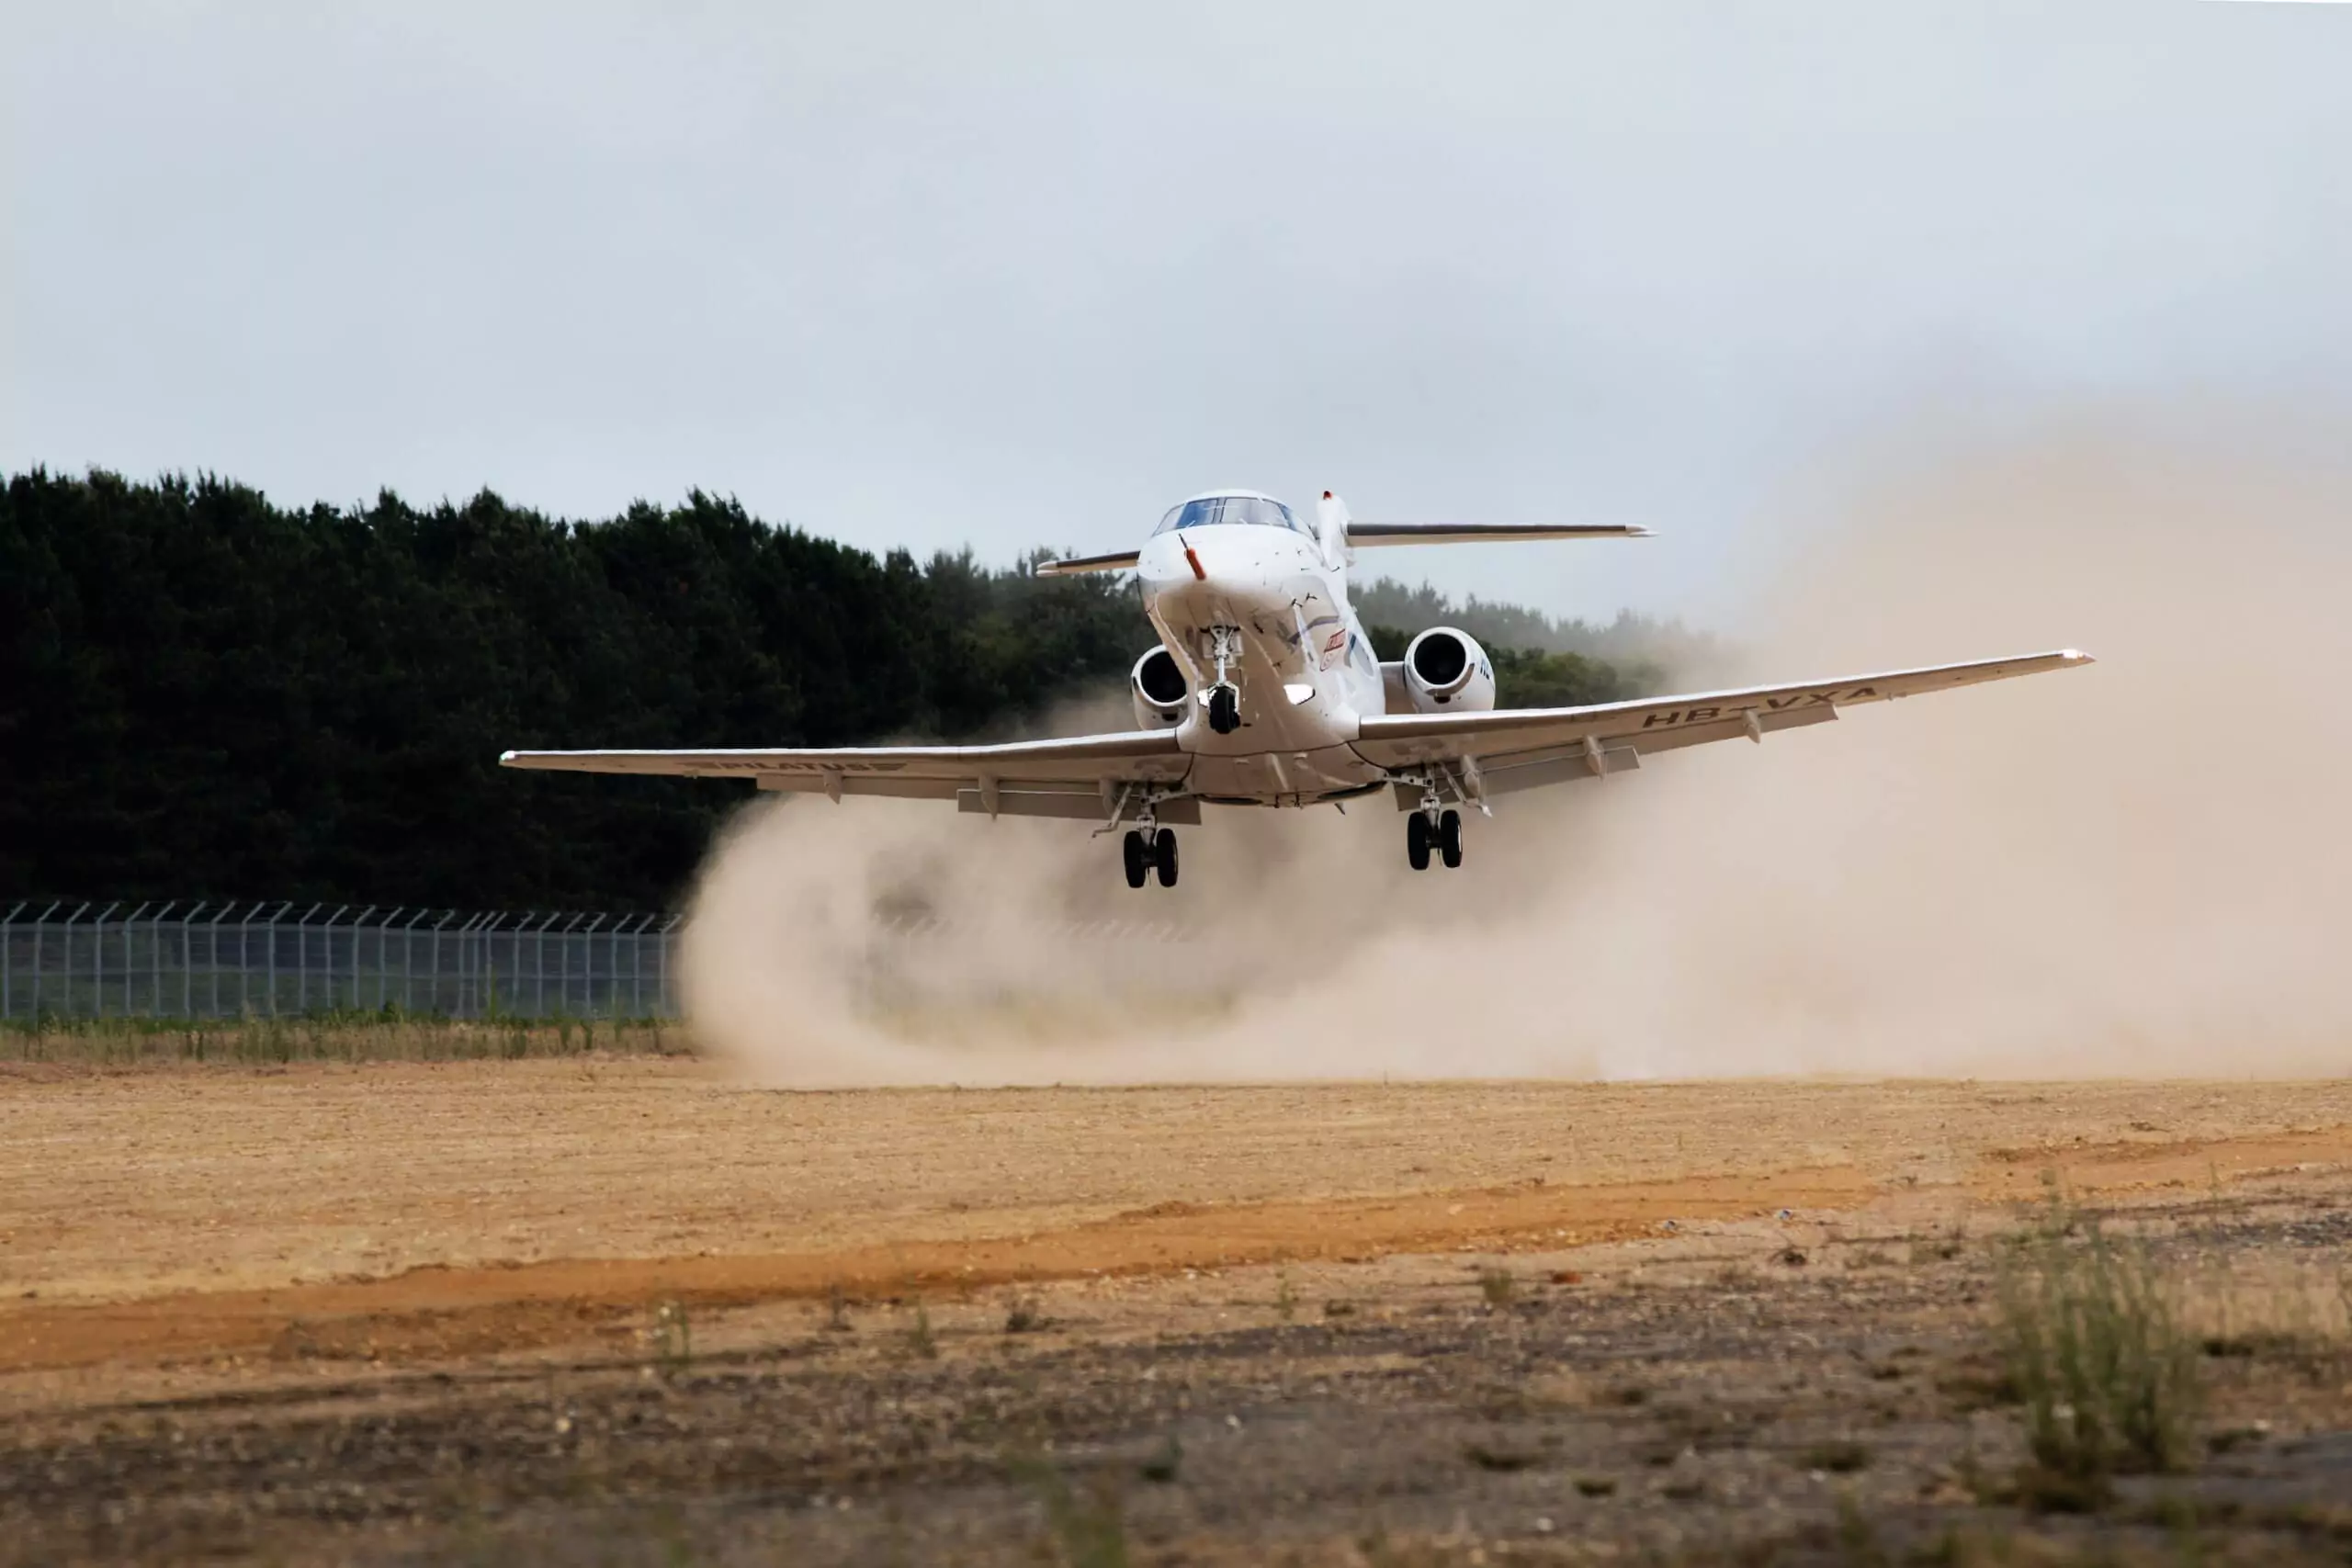 Pilatus pc-24 take off from dirt runway 